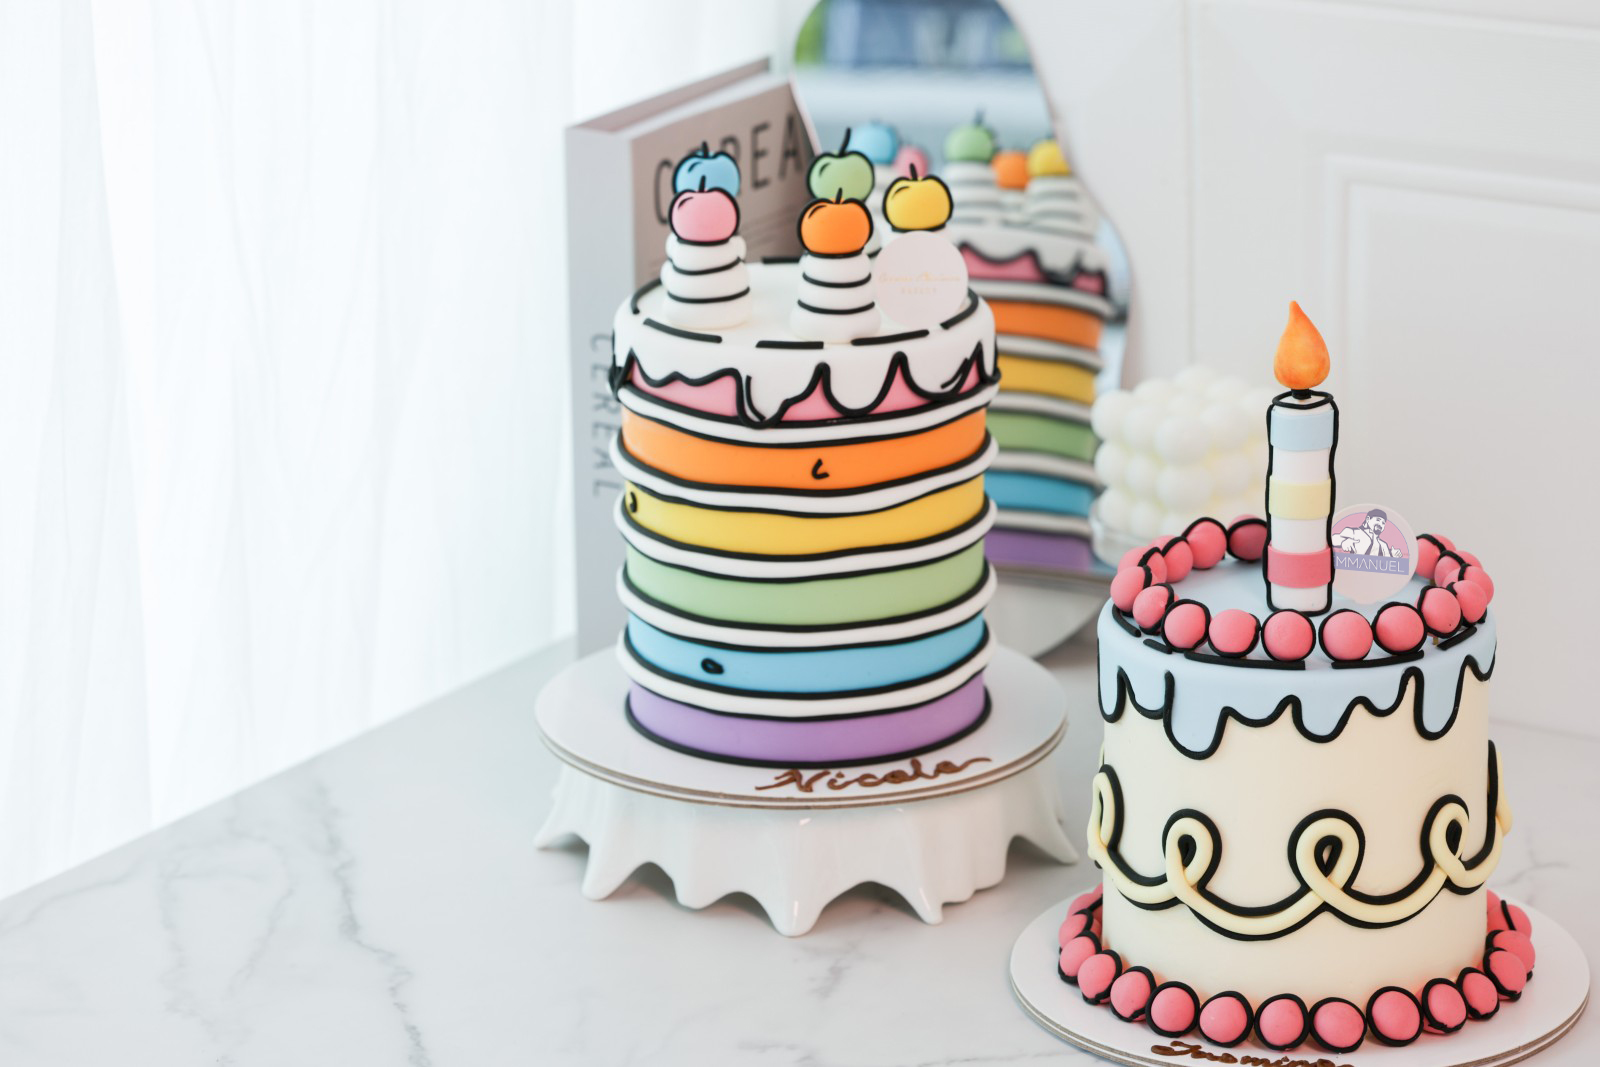 Make a Wish: Unique and Delicious Birthday Cake Delights